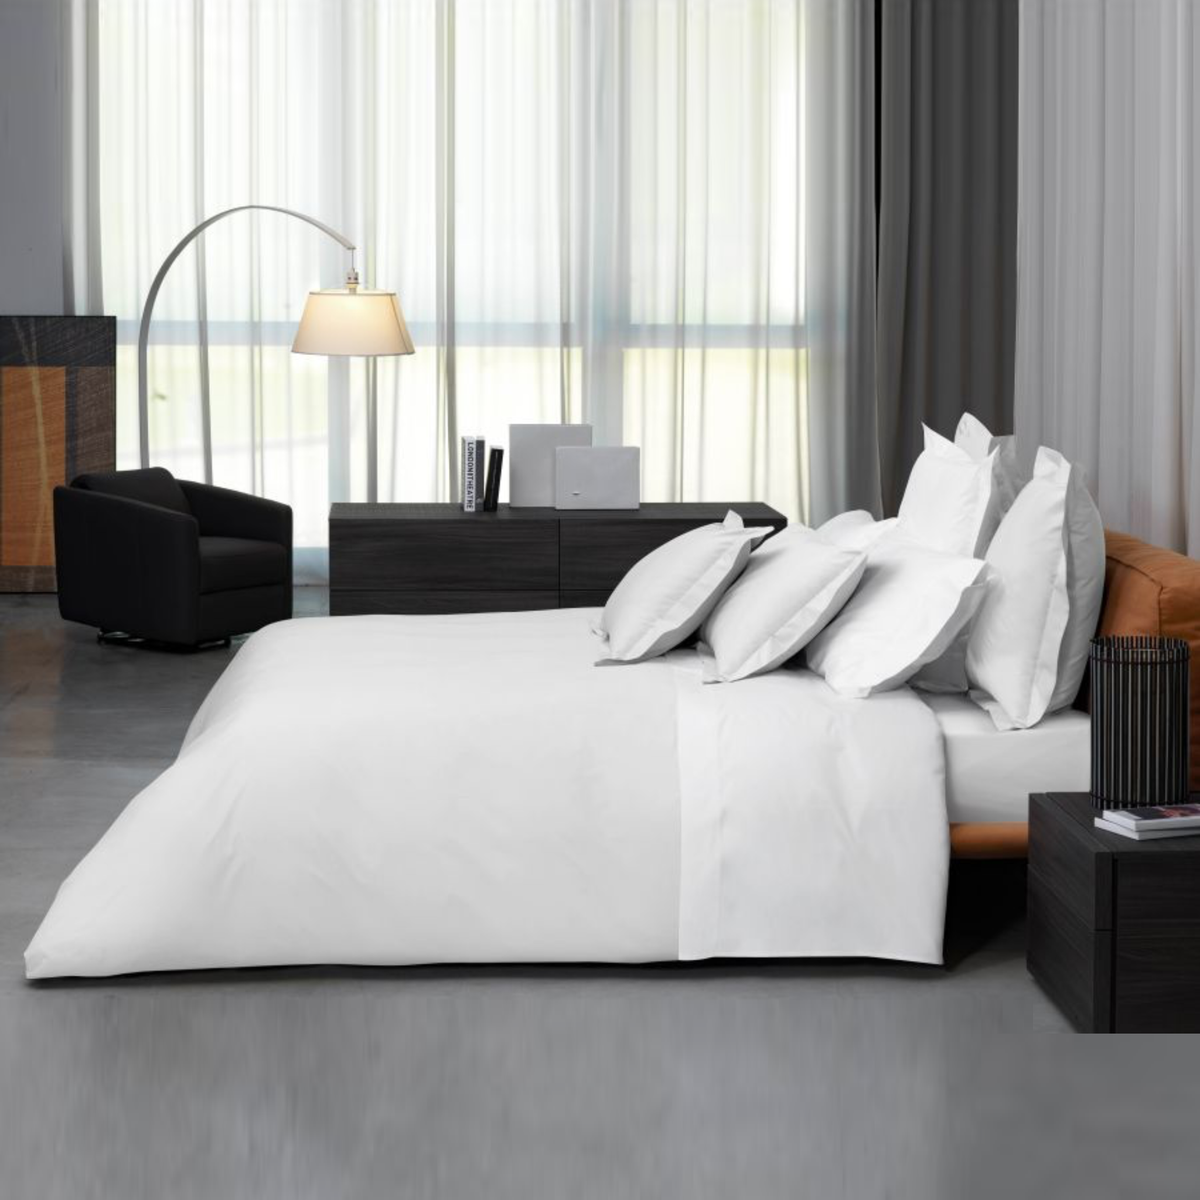 Full Bed Dressed in Signoria Gemma Bedding in White Color